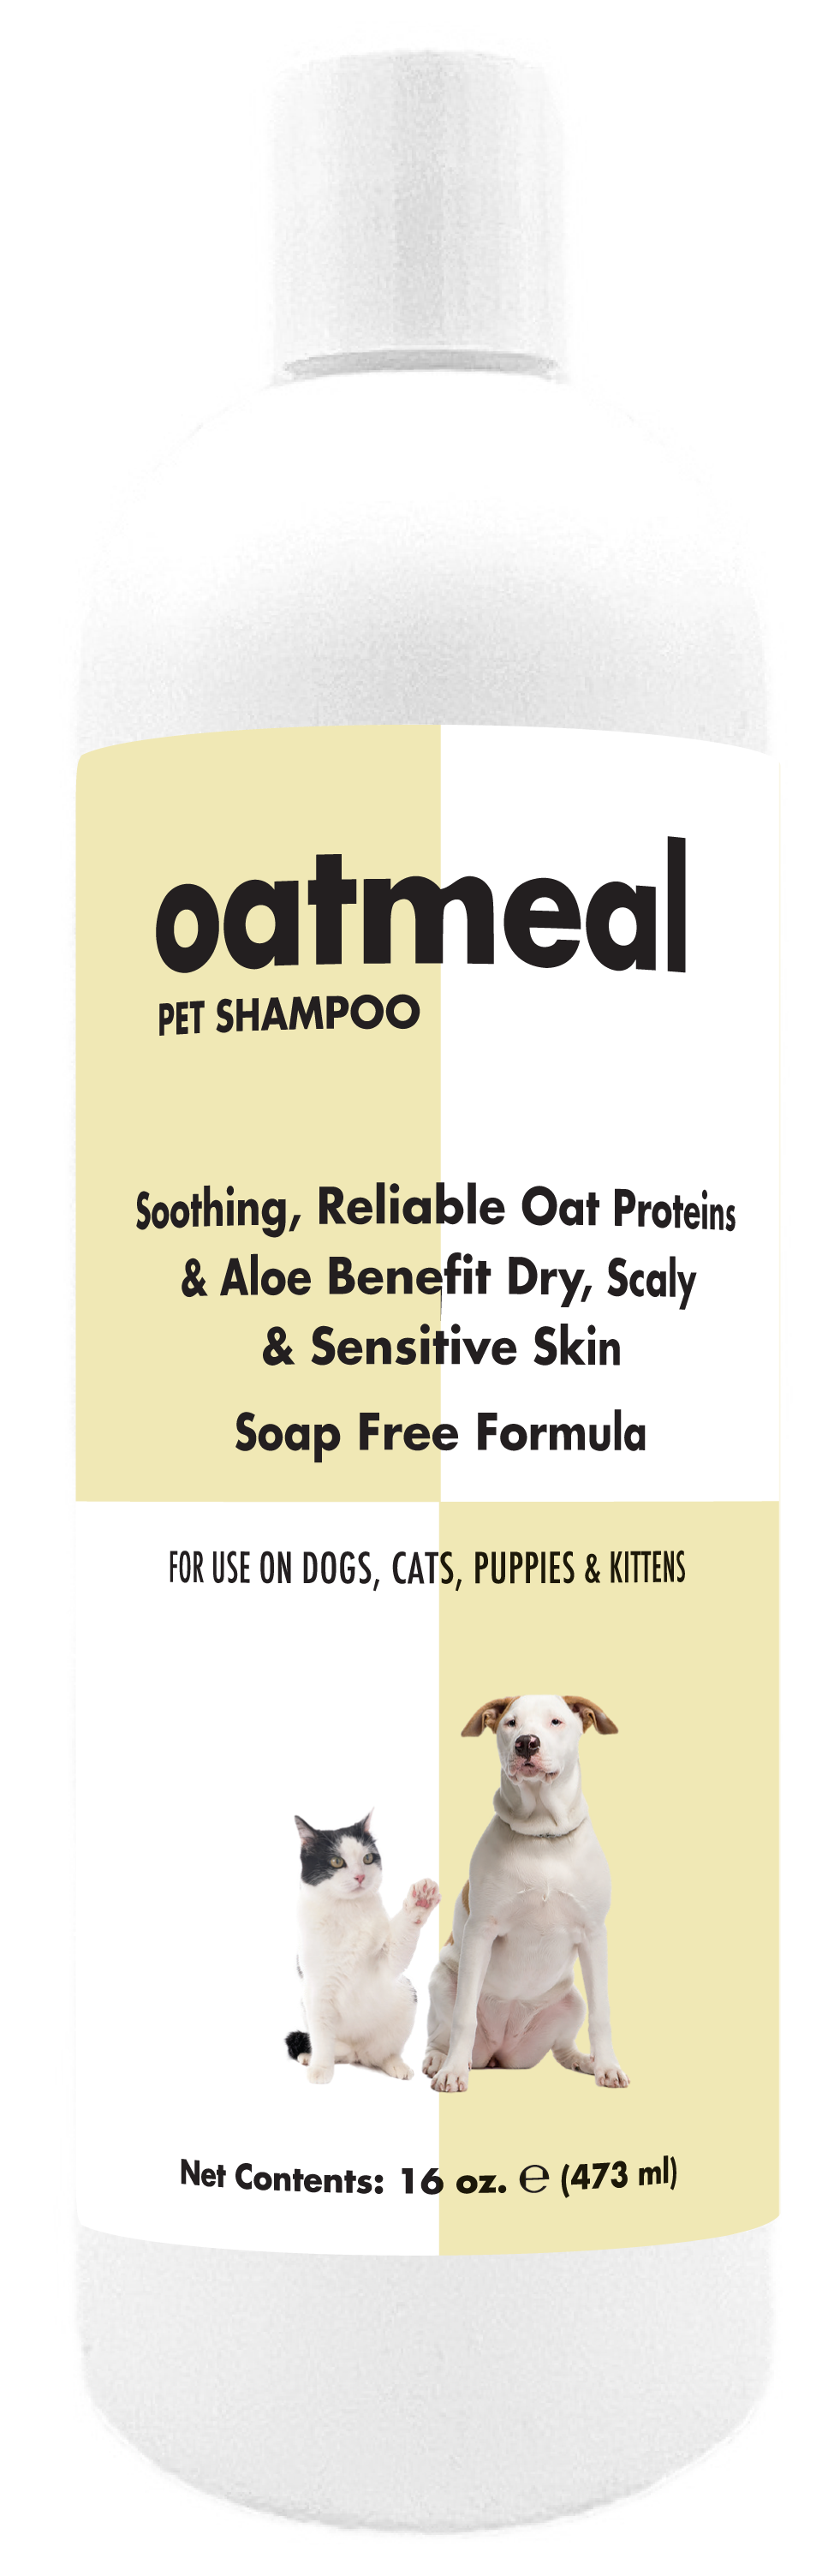 Oatmeal Pet Shampoo | Showseason®